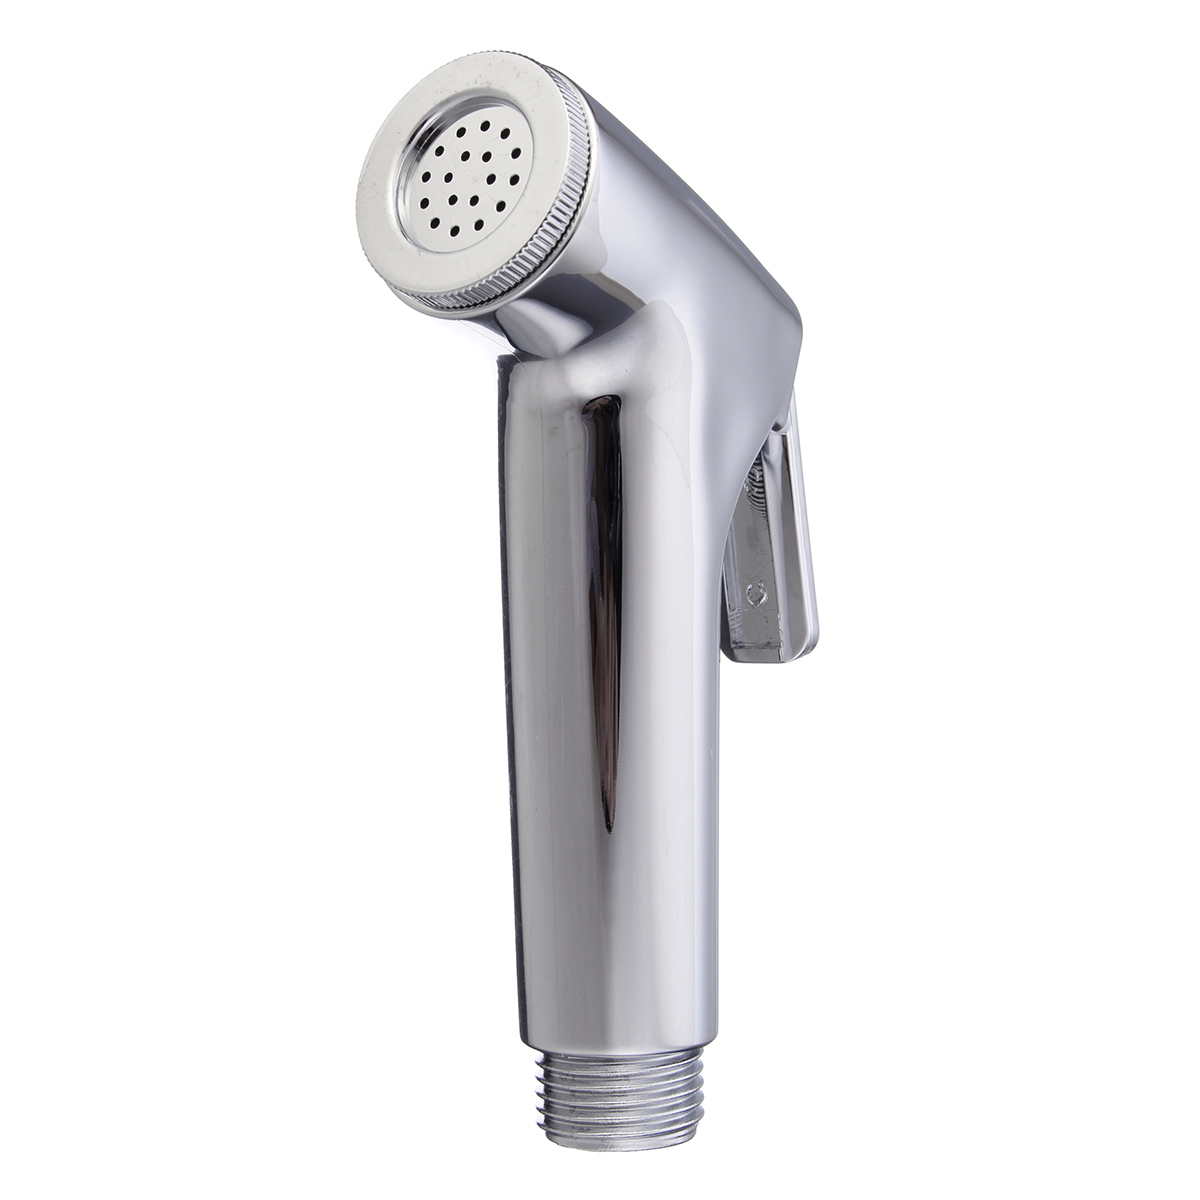 

Hand Held Shower Head Douche Toilet Bidet Sprayer Portable Washer Jet Shattaf Diverter Set